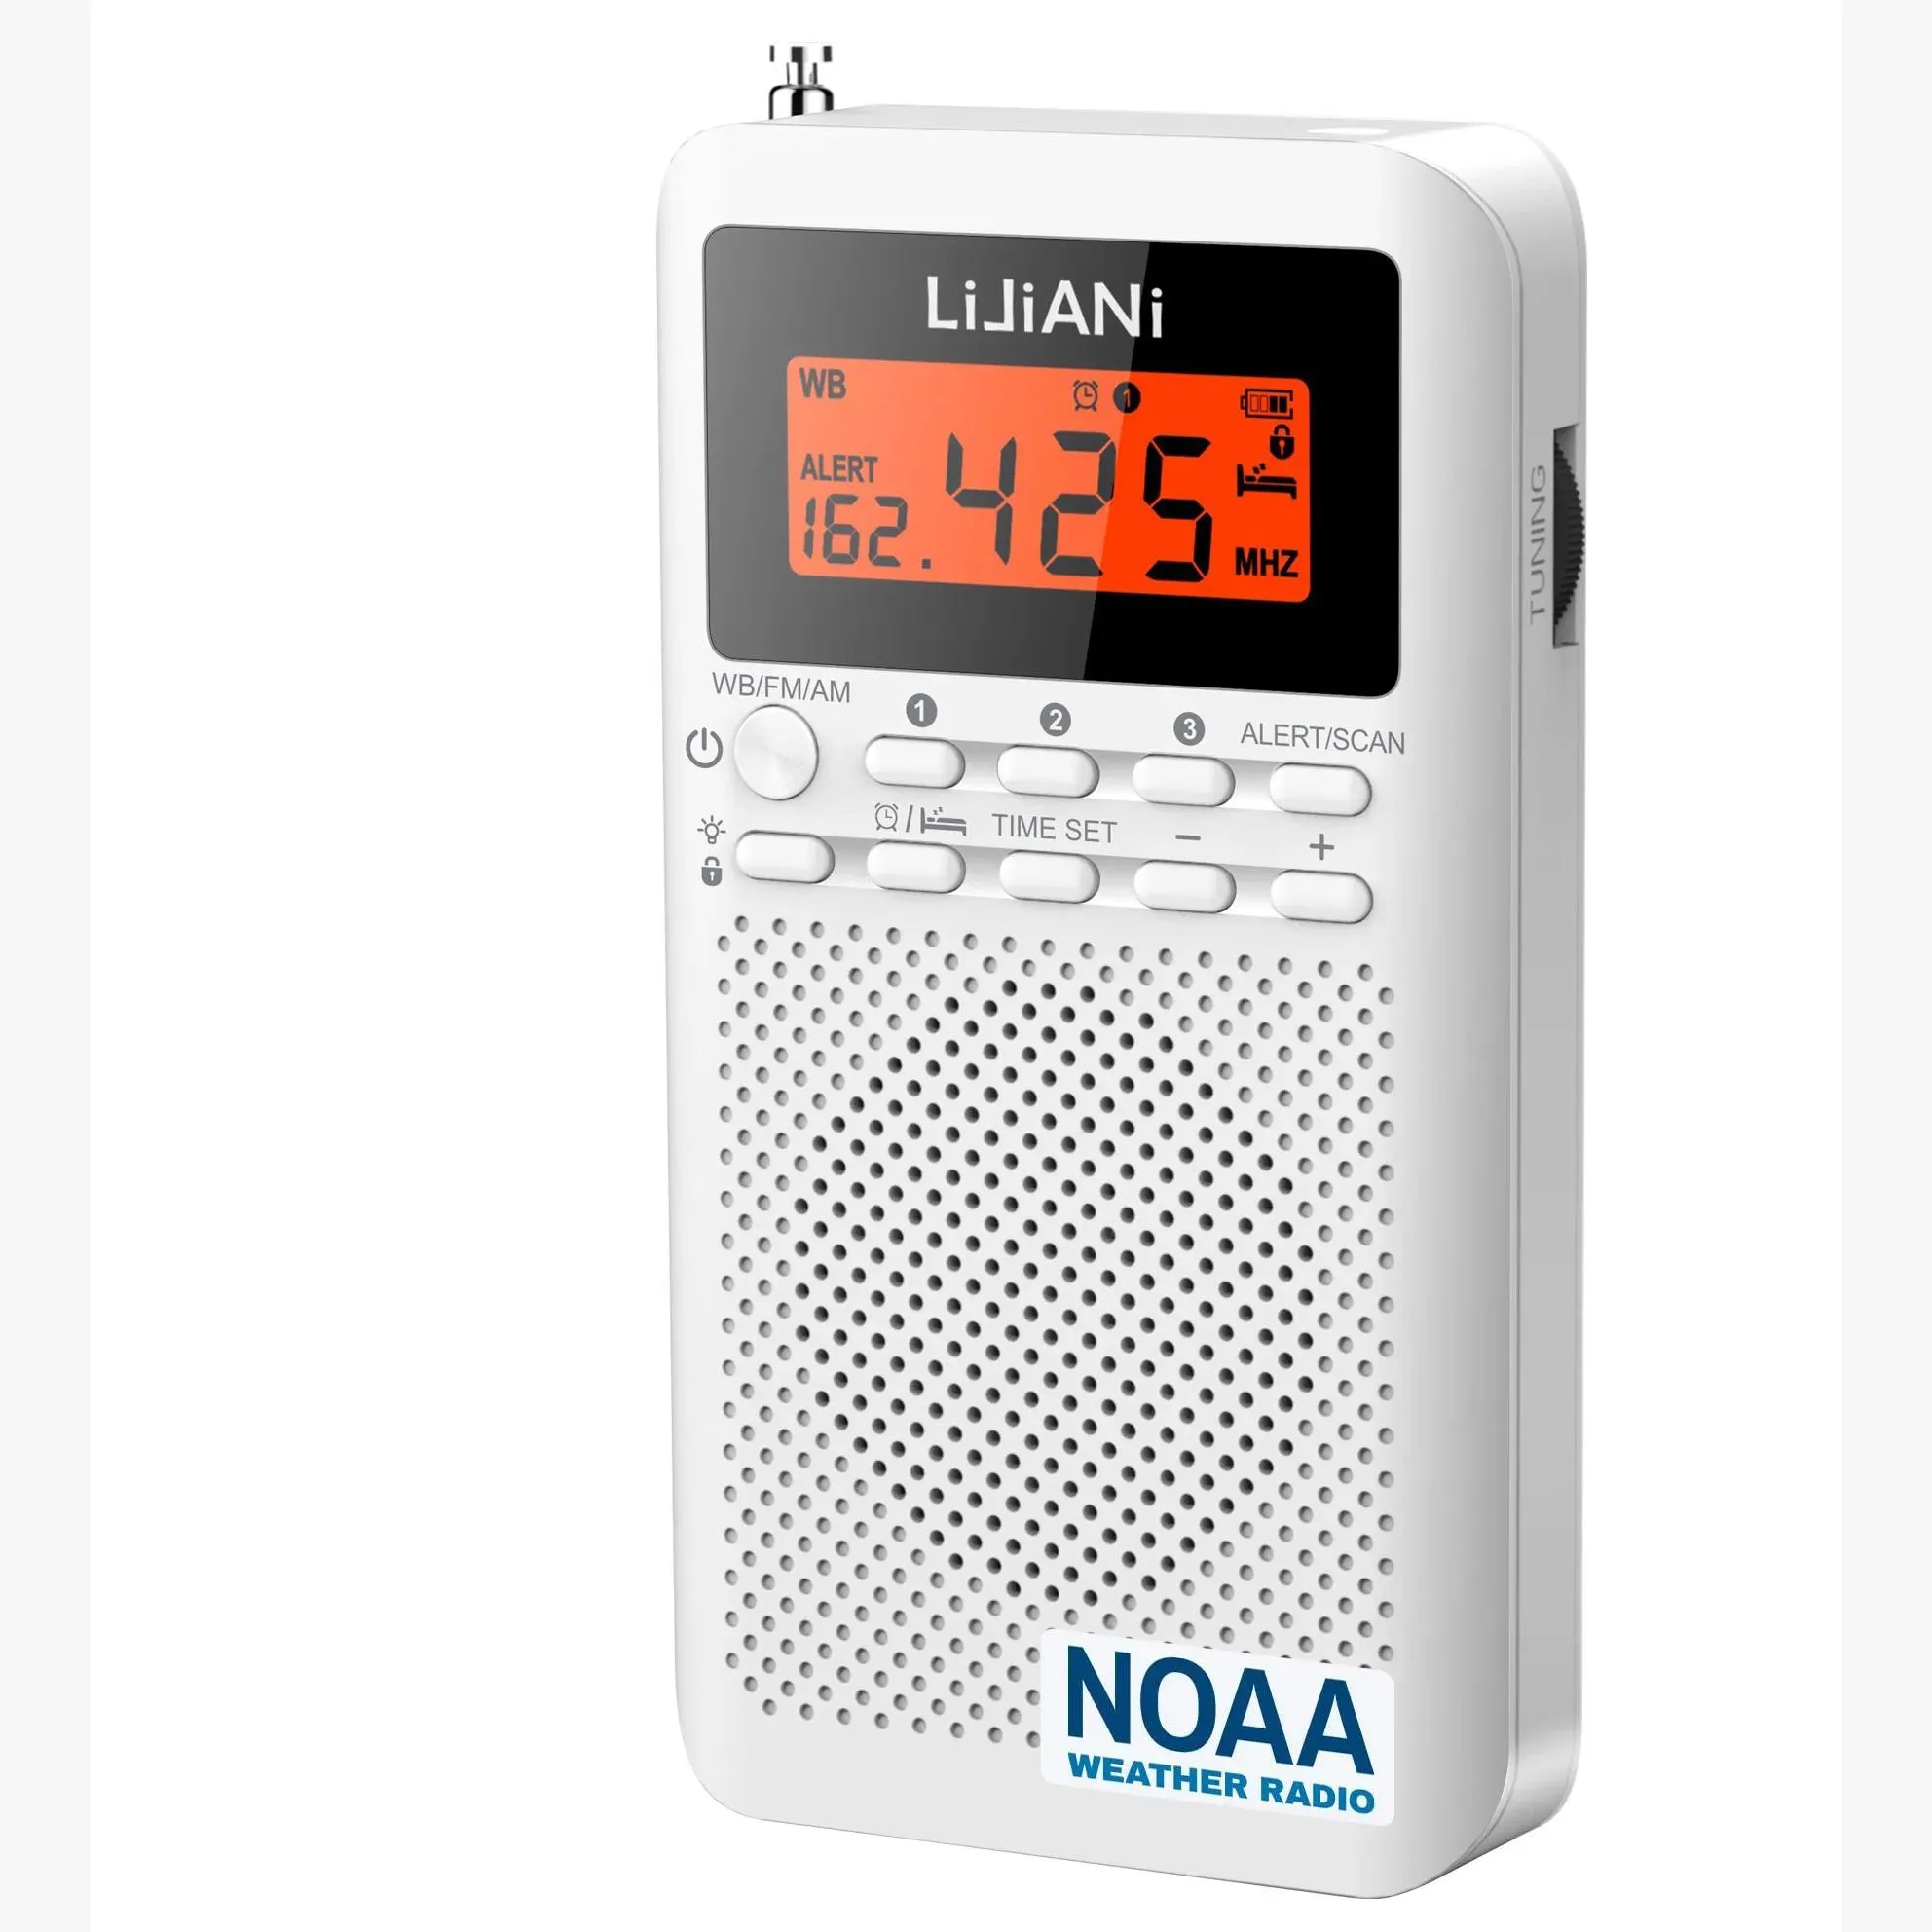 Radio NOAA Weather Radio AM/FM Band Battery Operated Portable Radio with LCD Display Digital Alarm Clock Sleep Timer,US only version